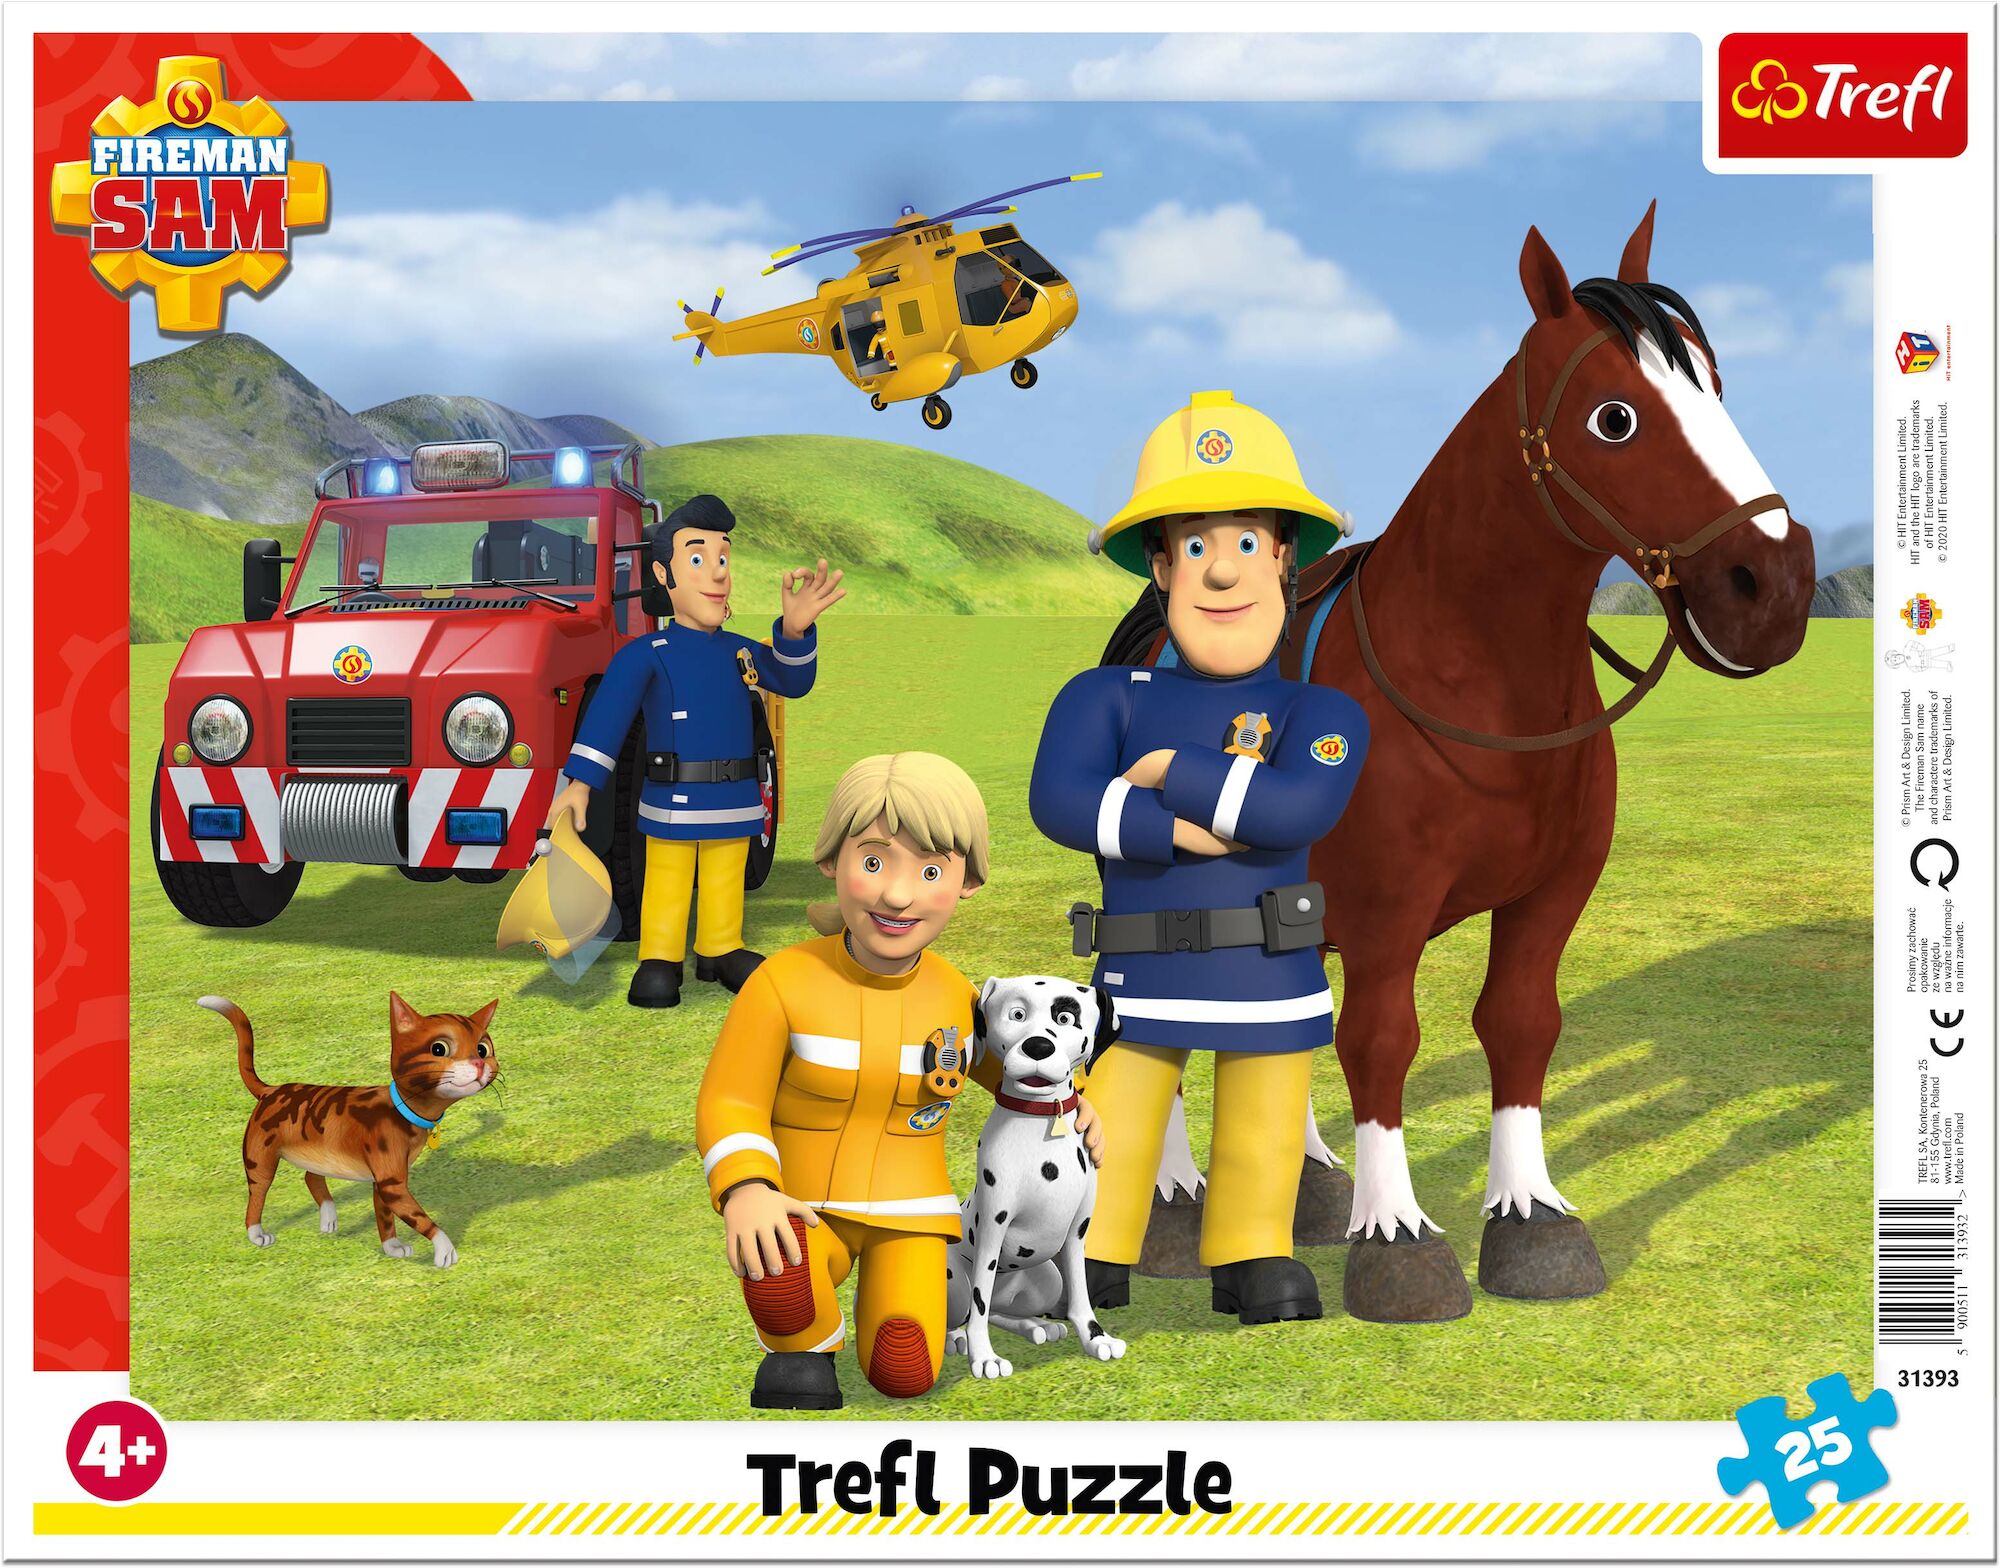 Trefl Feuerwehrmann Sam Puzzle 25 Teile